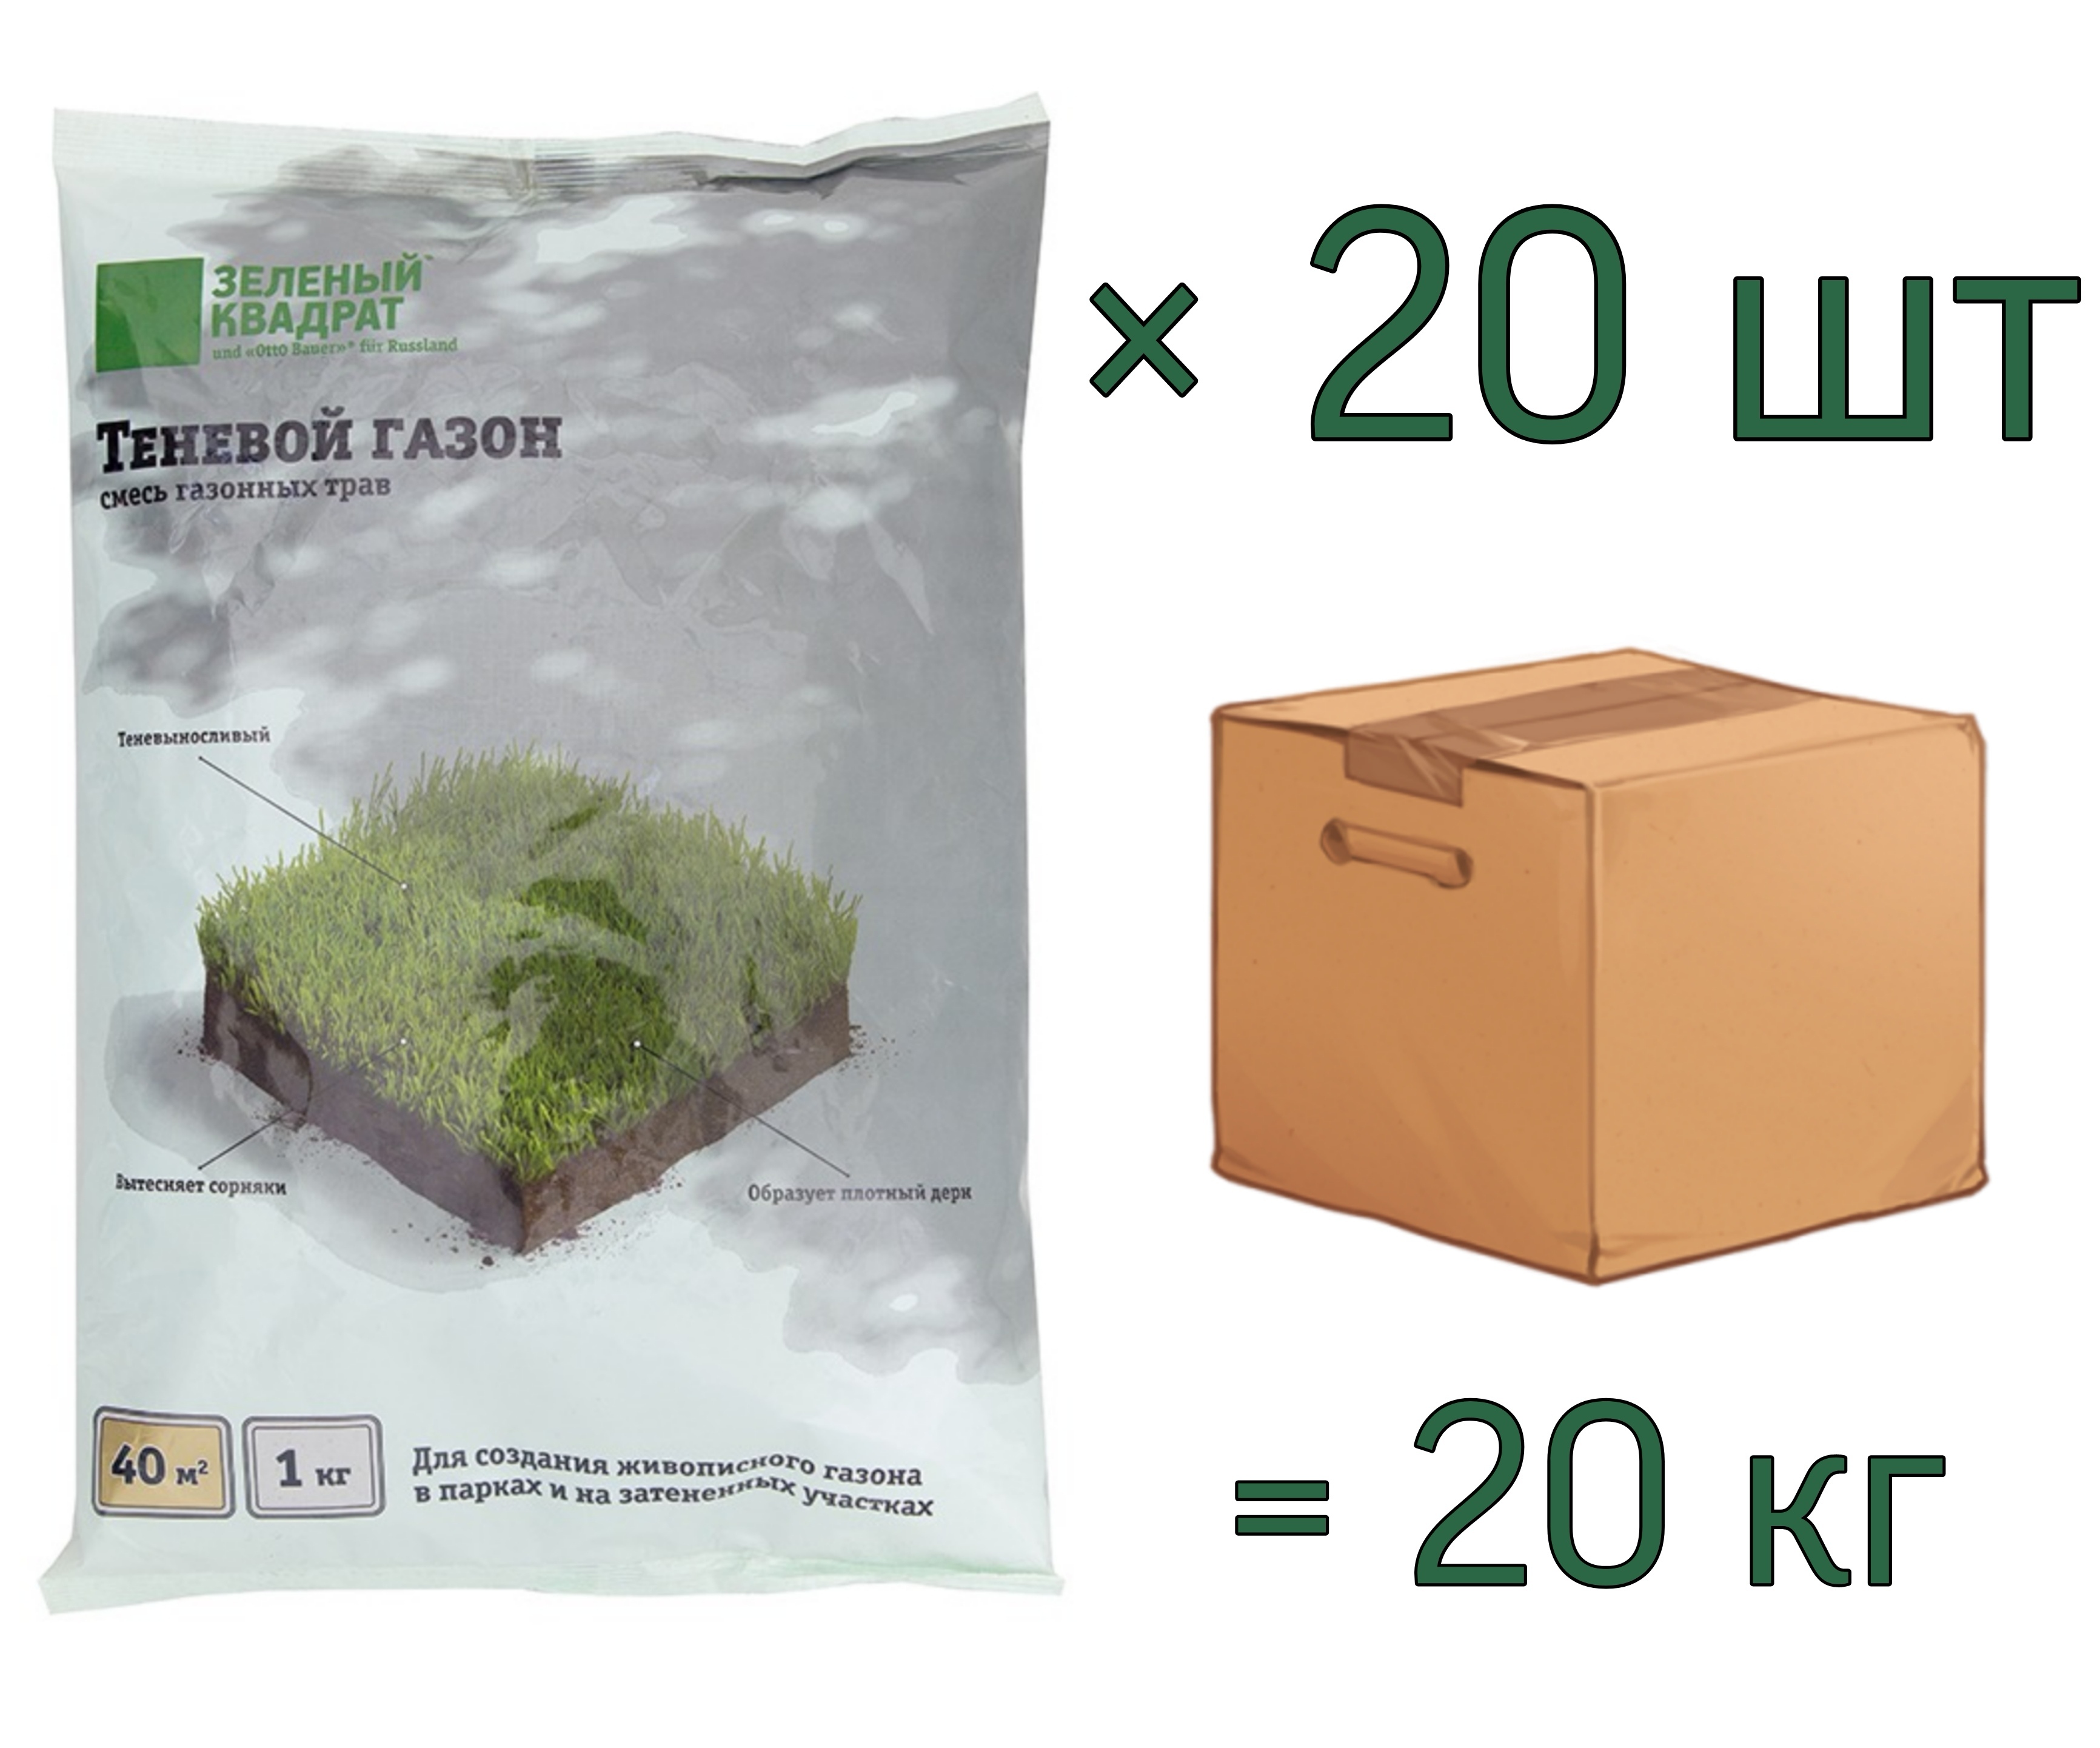 Семена газона Зеленый квадрат ТЕНЕВОЙ, 1 кг х 20 шт (20 кг)